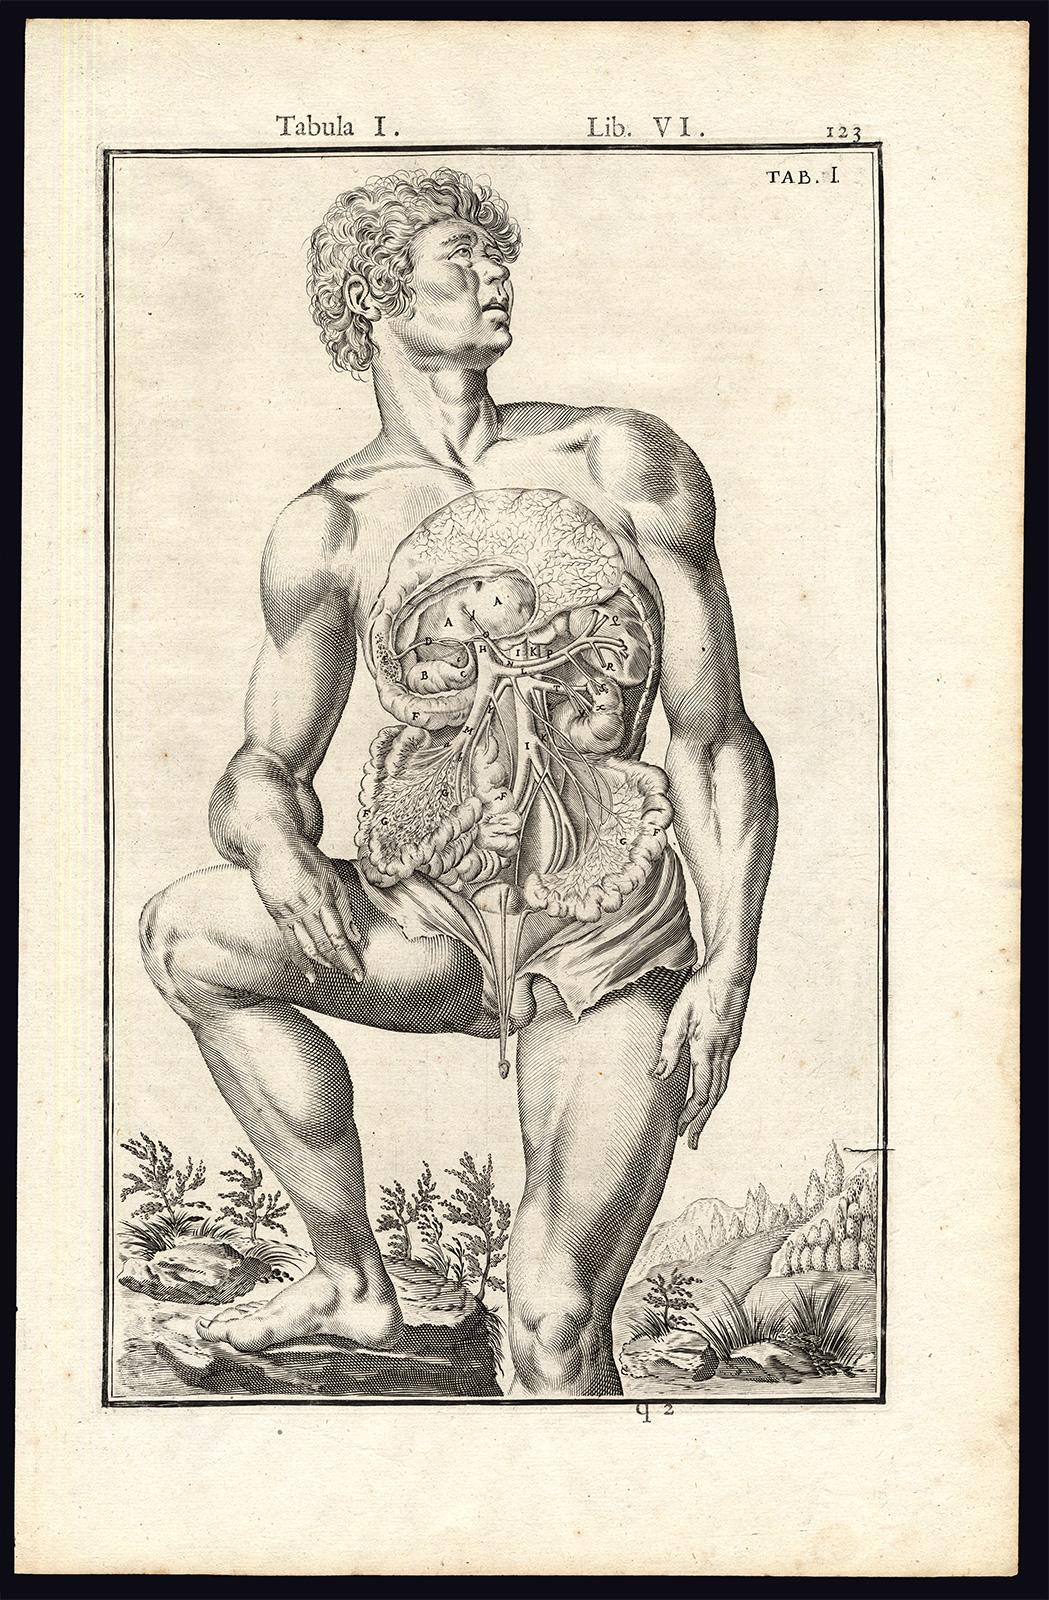 Adrianus Spigelius Print - Rare anatomical print - Male abdomen by Spigelius - Engraving - 17th century